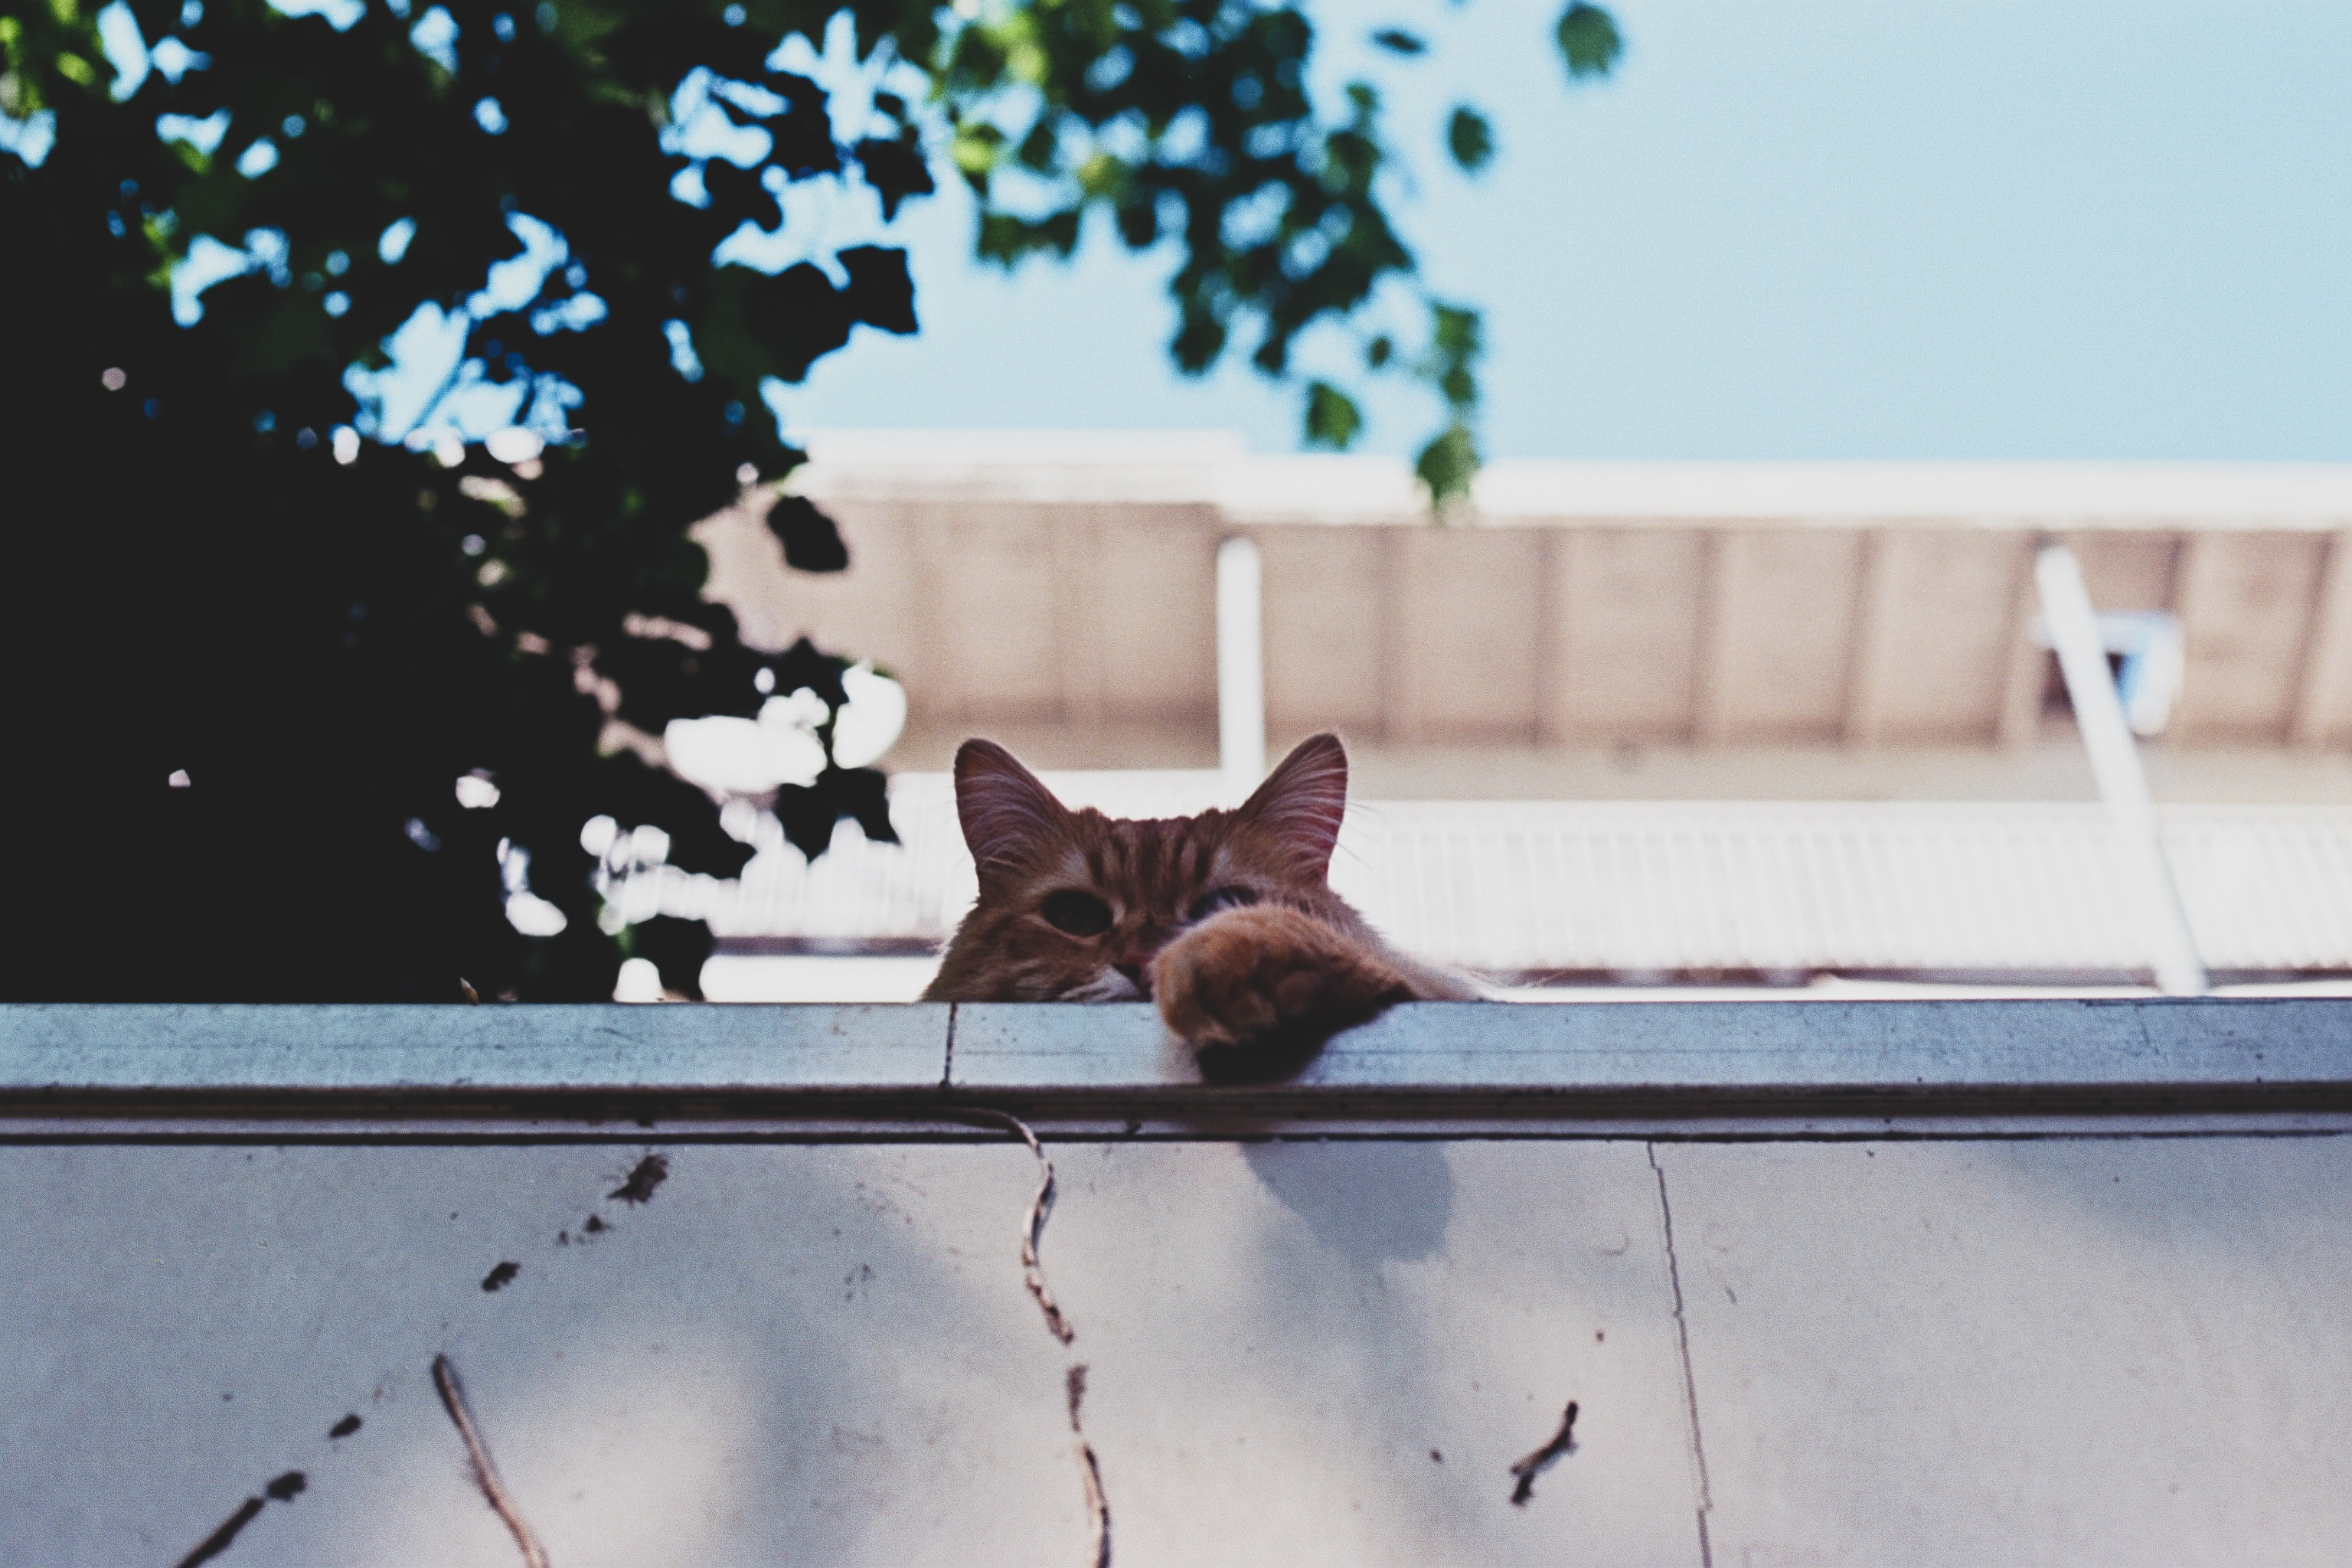 Cat on the balcony: Not entirely harmless